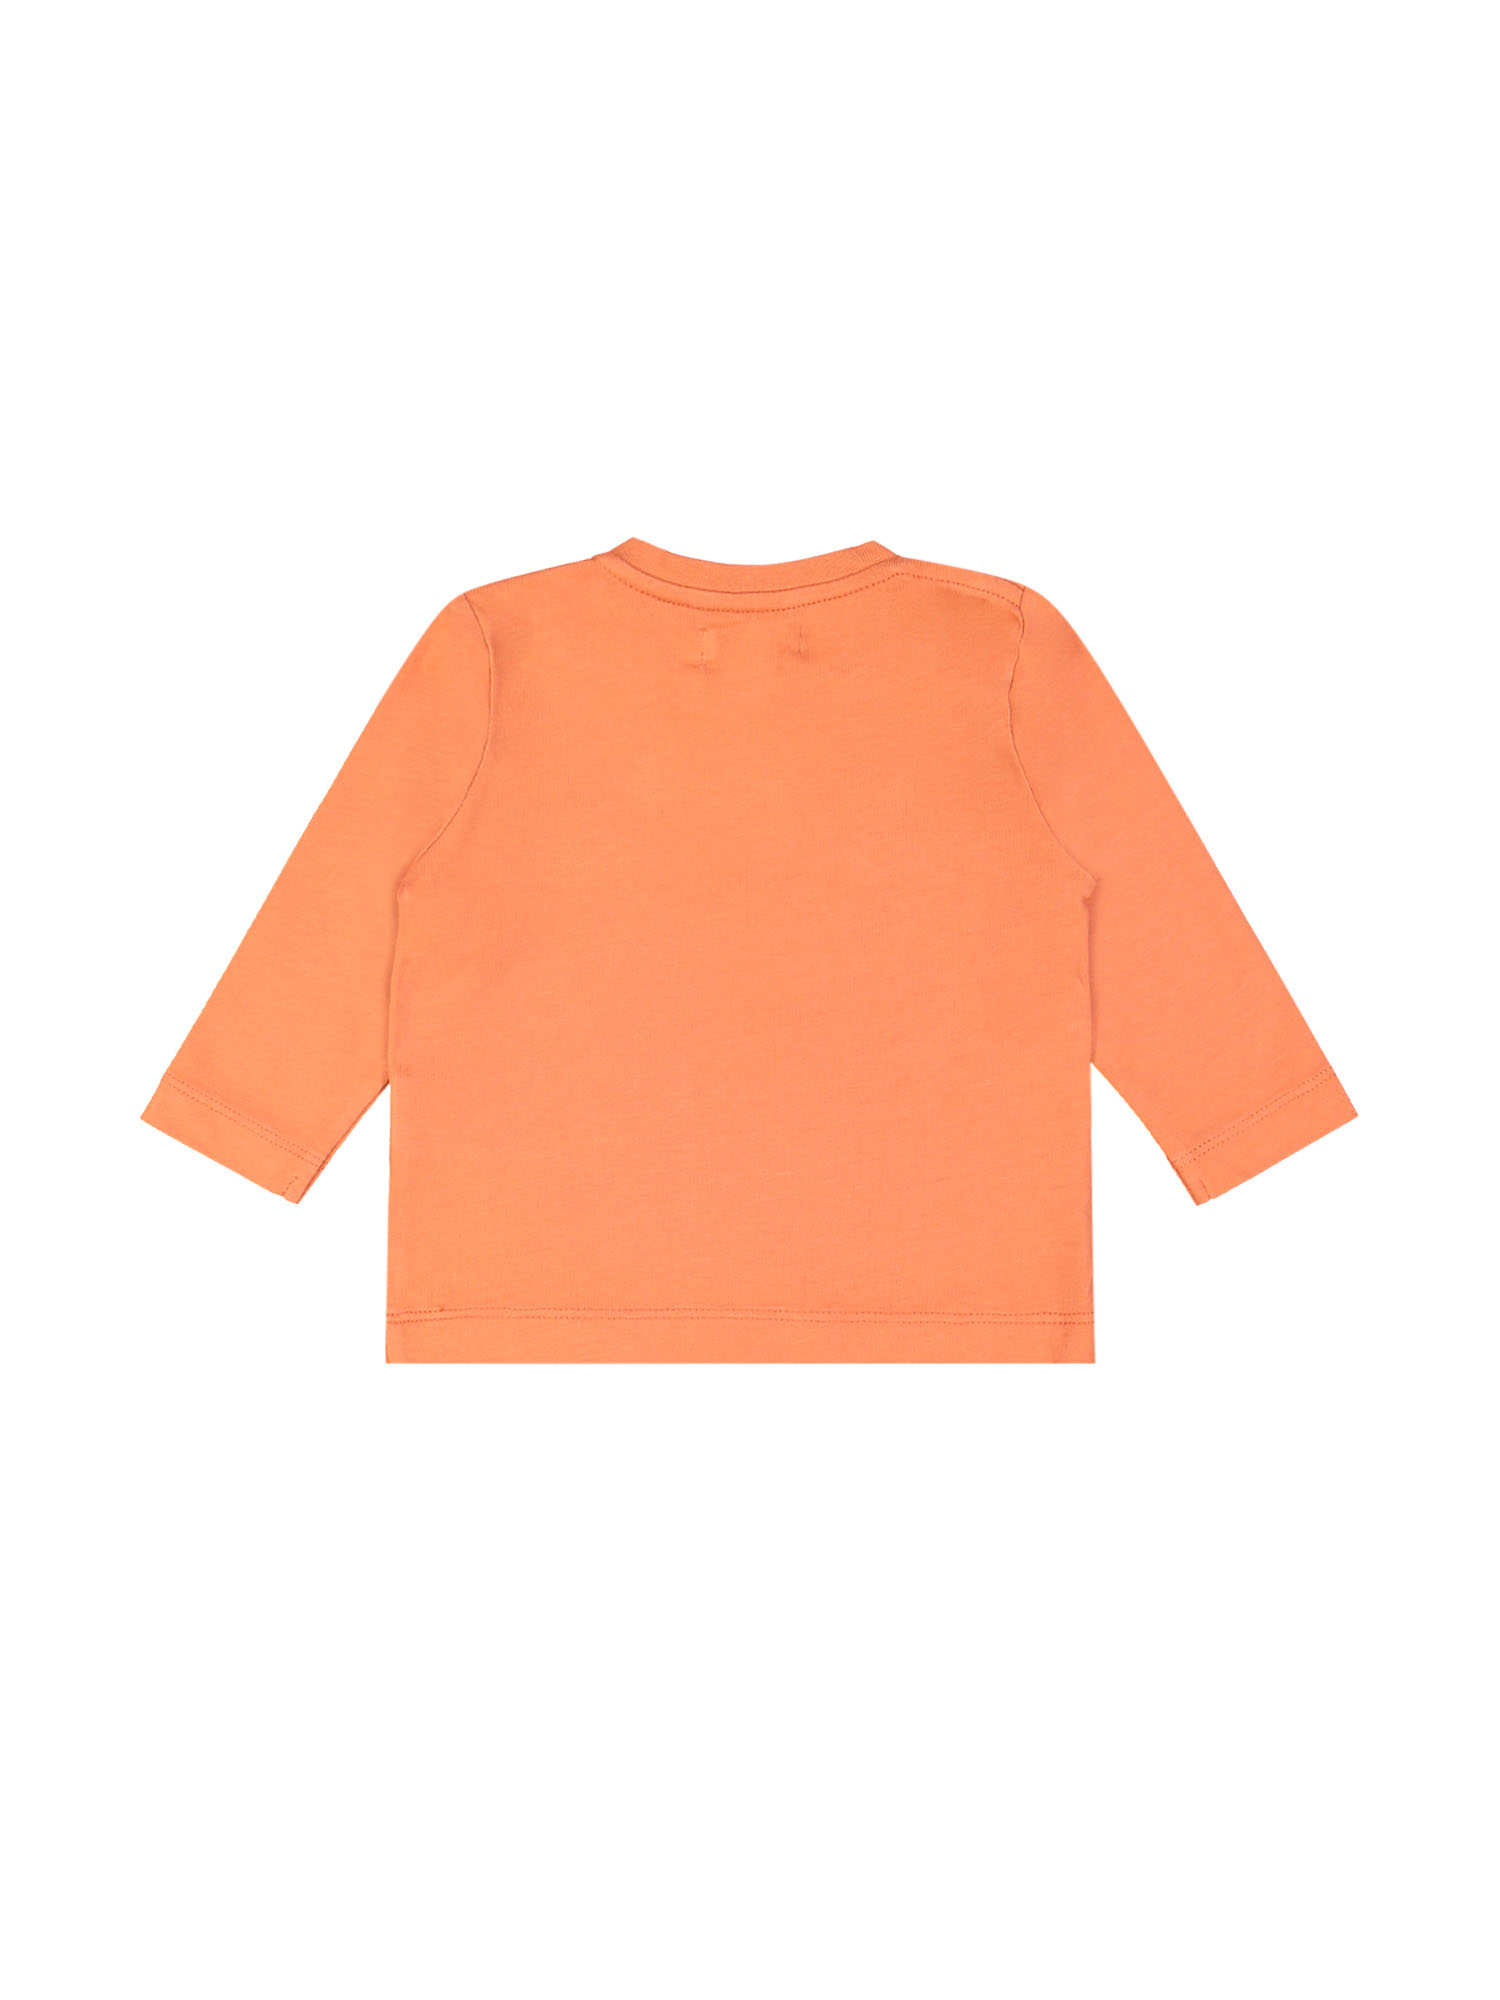 T-shirt mini home alone oranje 06m